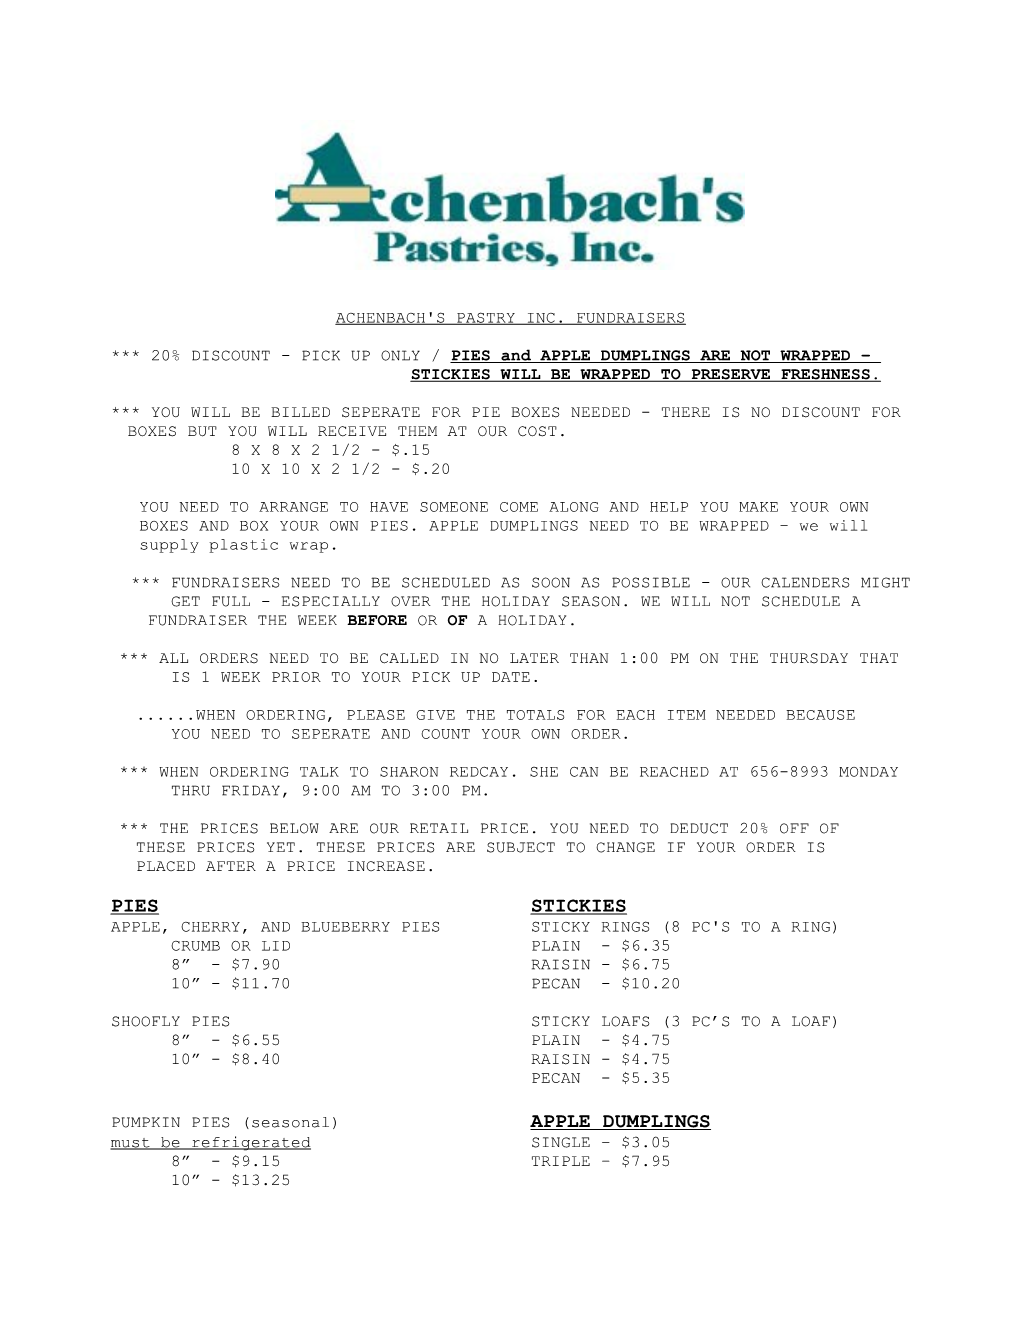 Achenbach's Pastry Inc